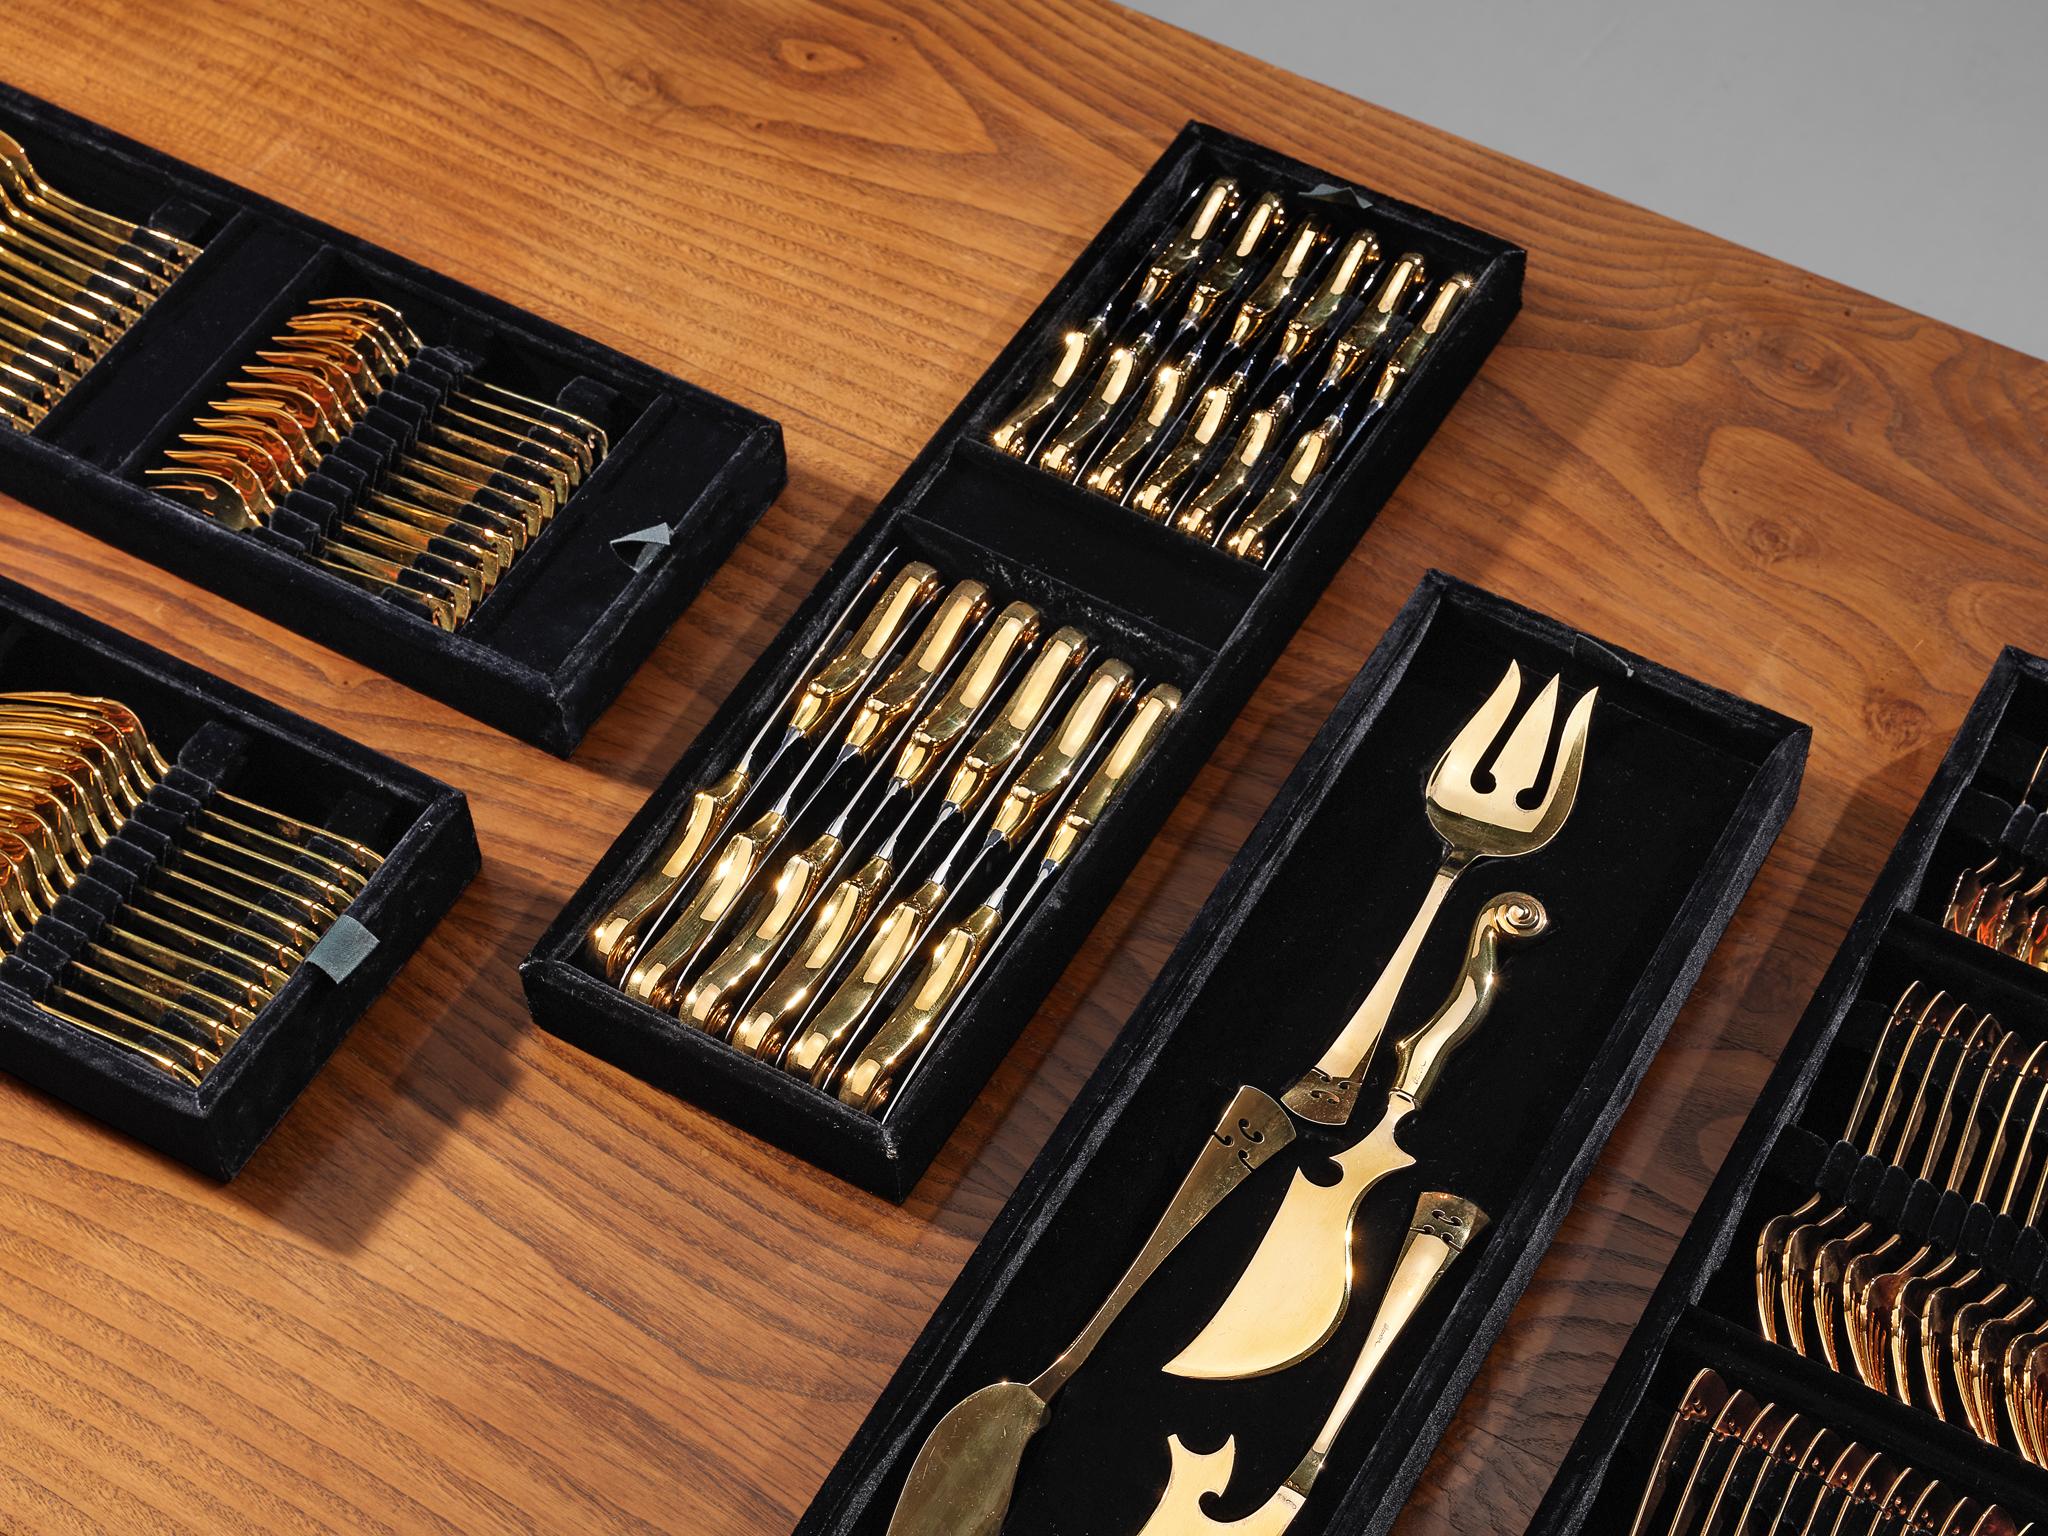 Arman ‘Violon’ Cutlery Service with 116 Pieces in Artistic Cabinet